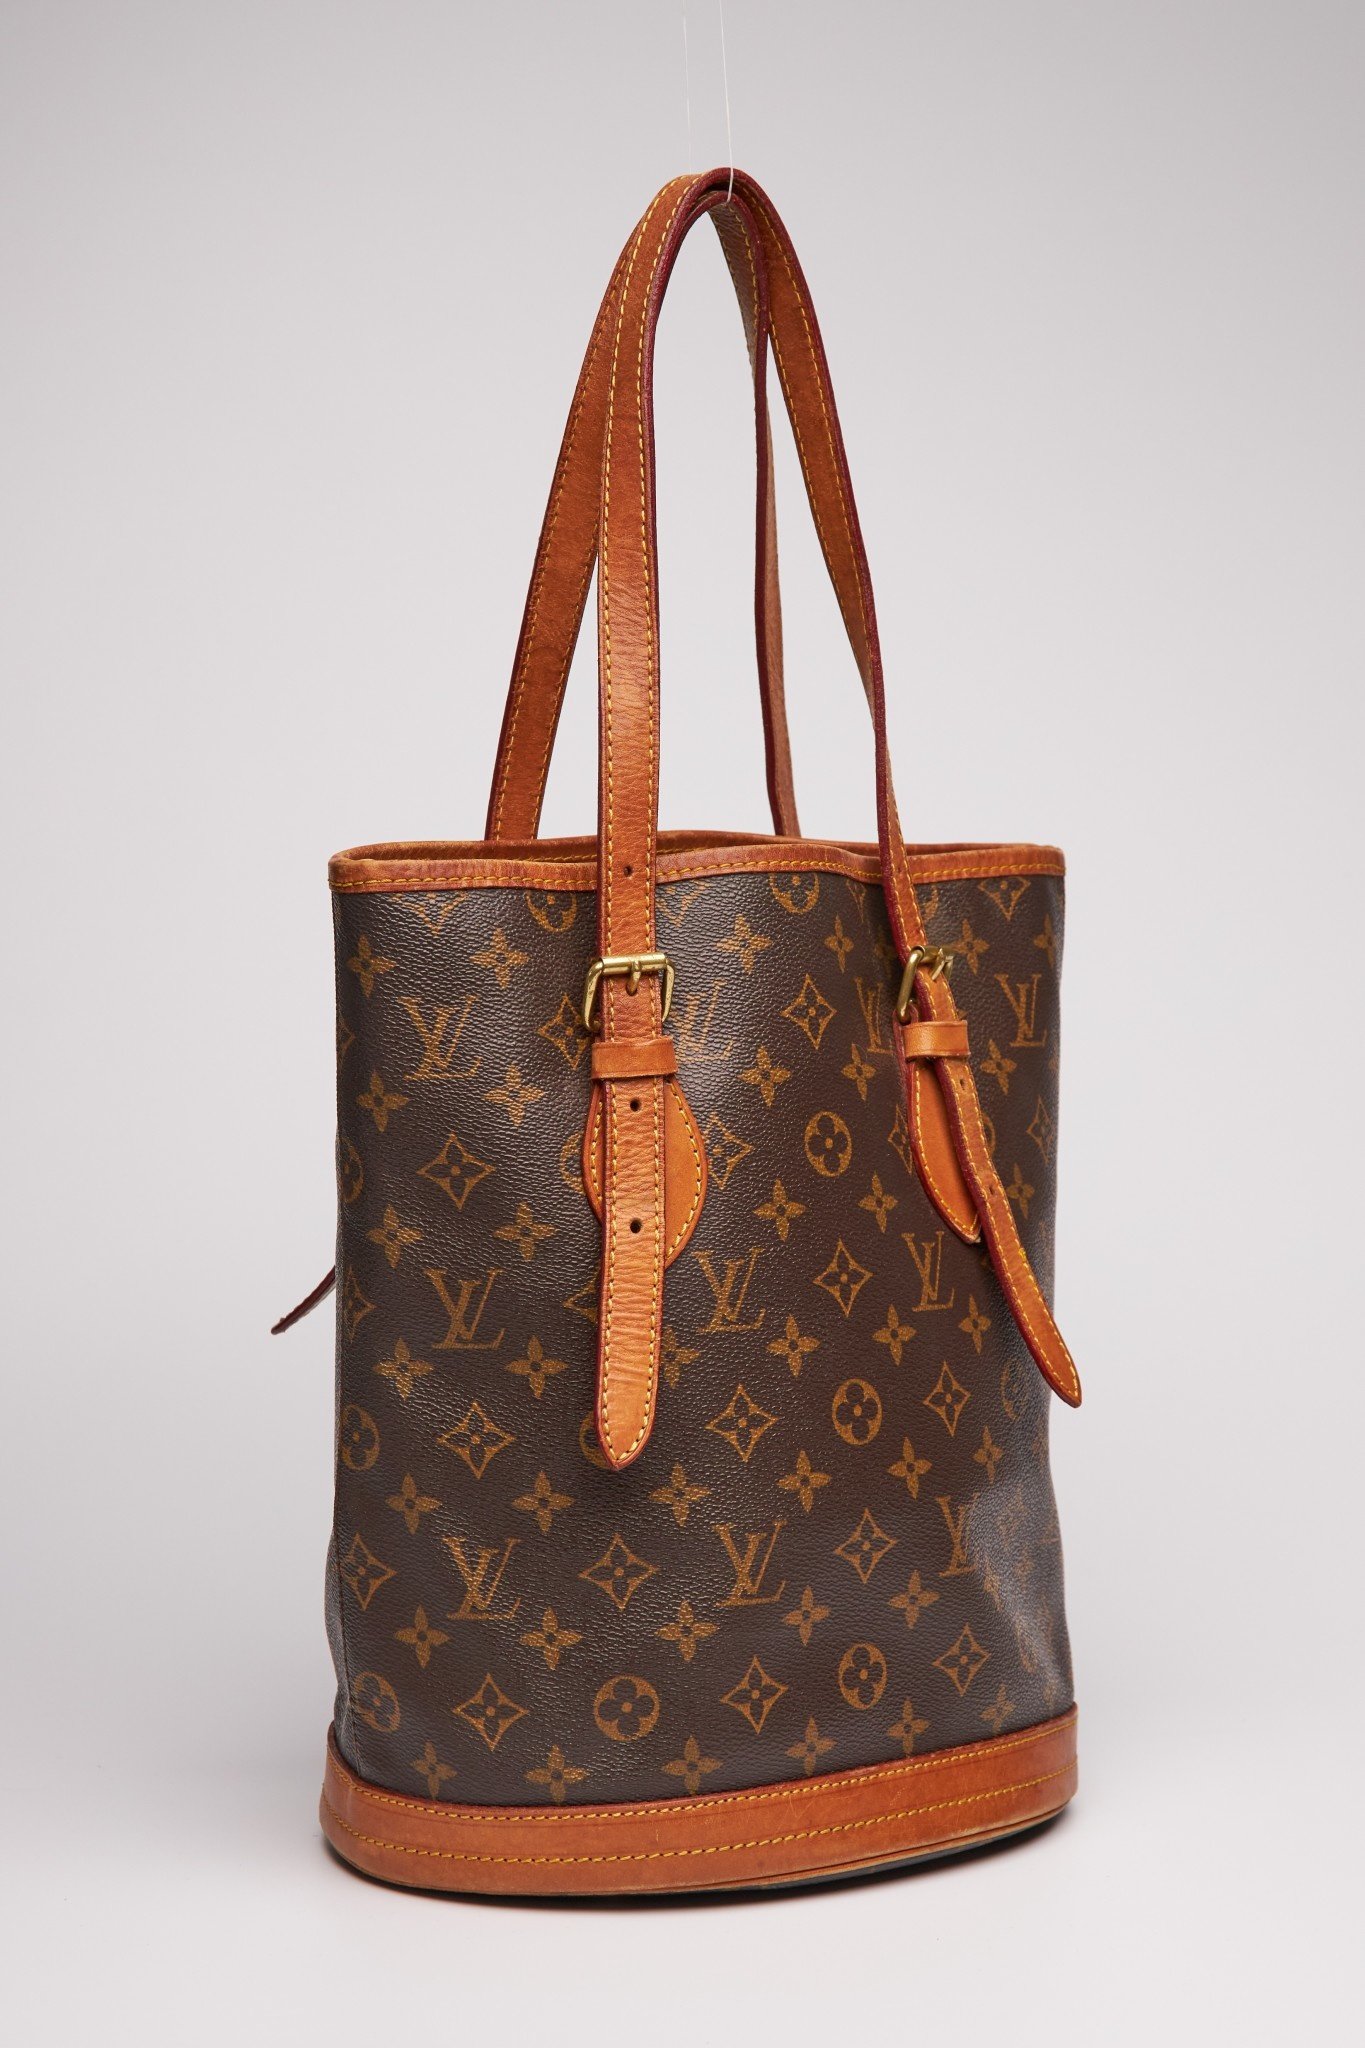 1980s USA Traditional Louis Vuitton LV monogram satchel